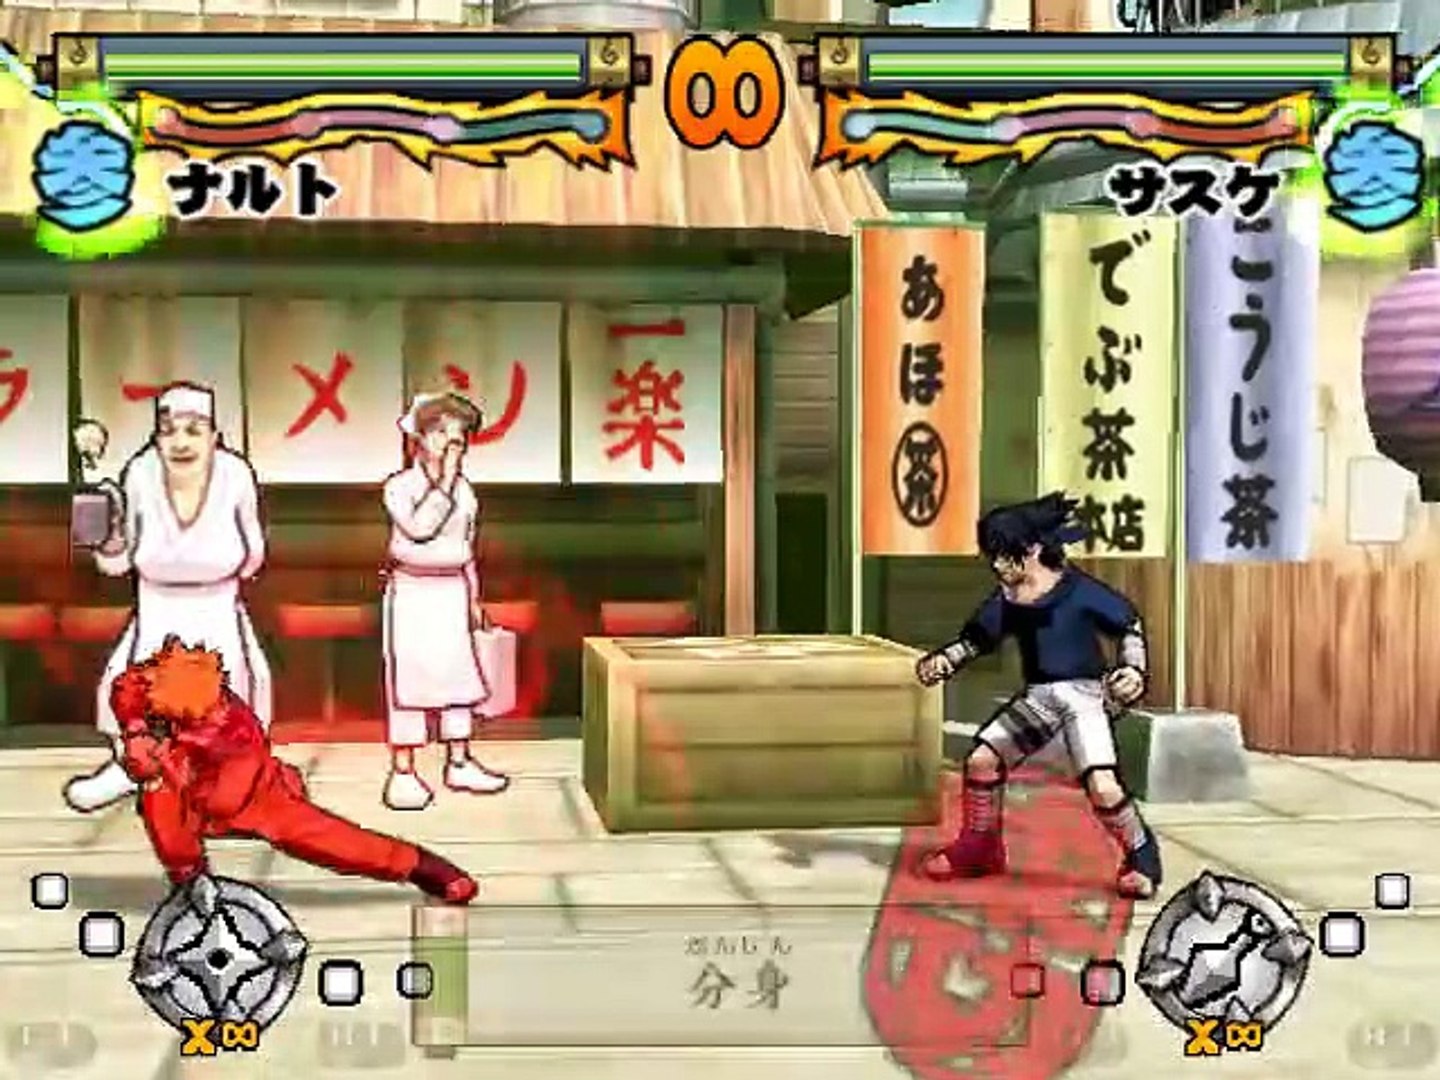 Naruto Shippuden : Ultimate Ninja 5 online multiplayer - ps2 - Vidéo  Dailymotion